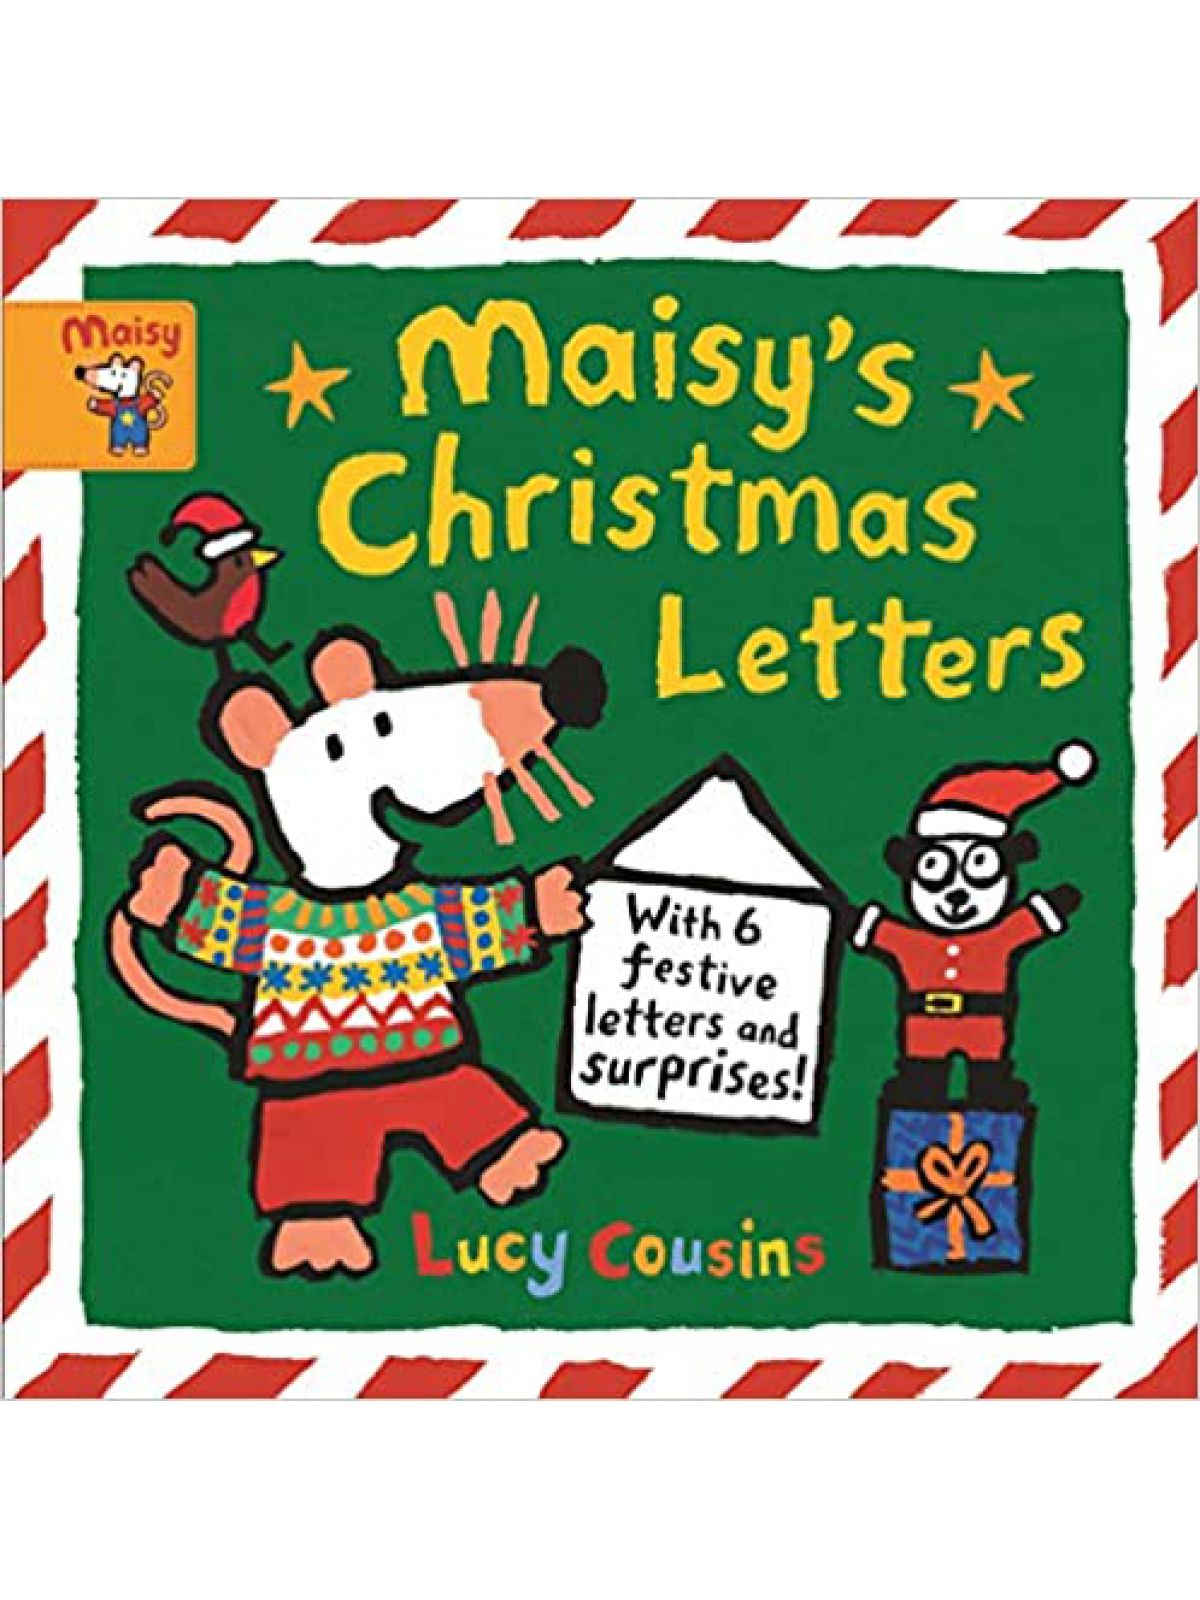 MAISY’S CHRISTMAS LETTERS  Купить Книгу на Английском